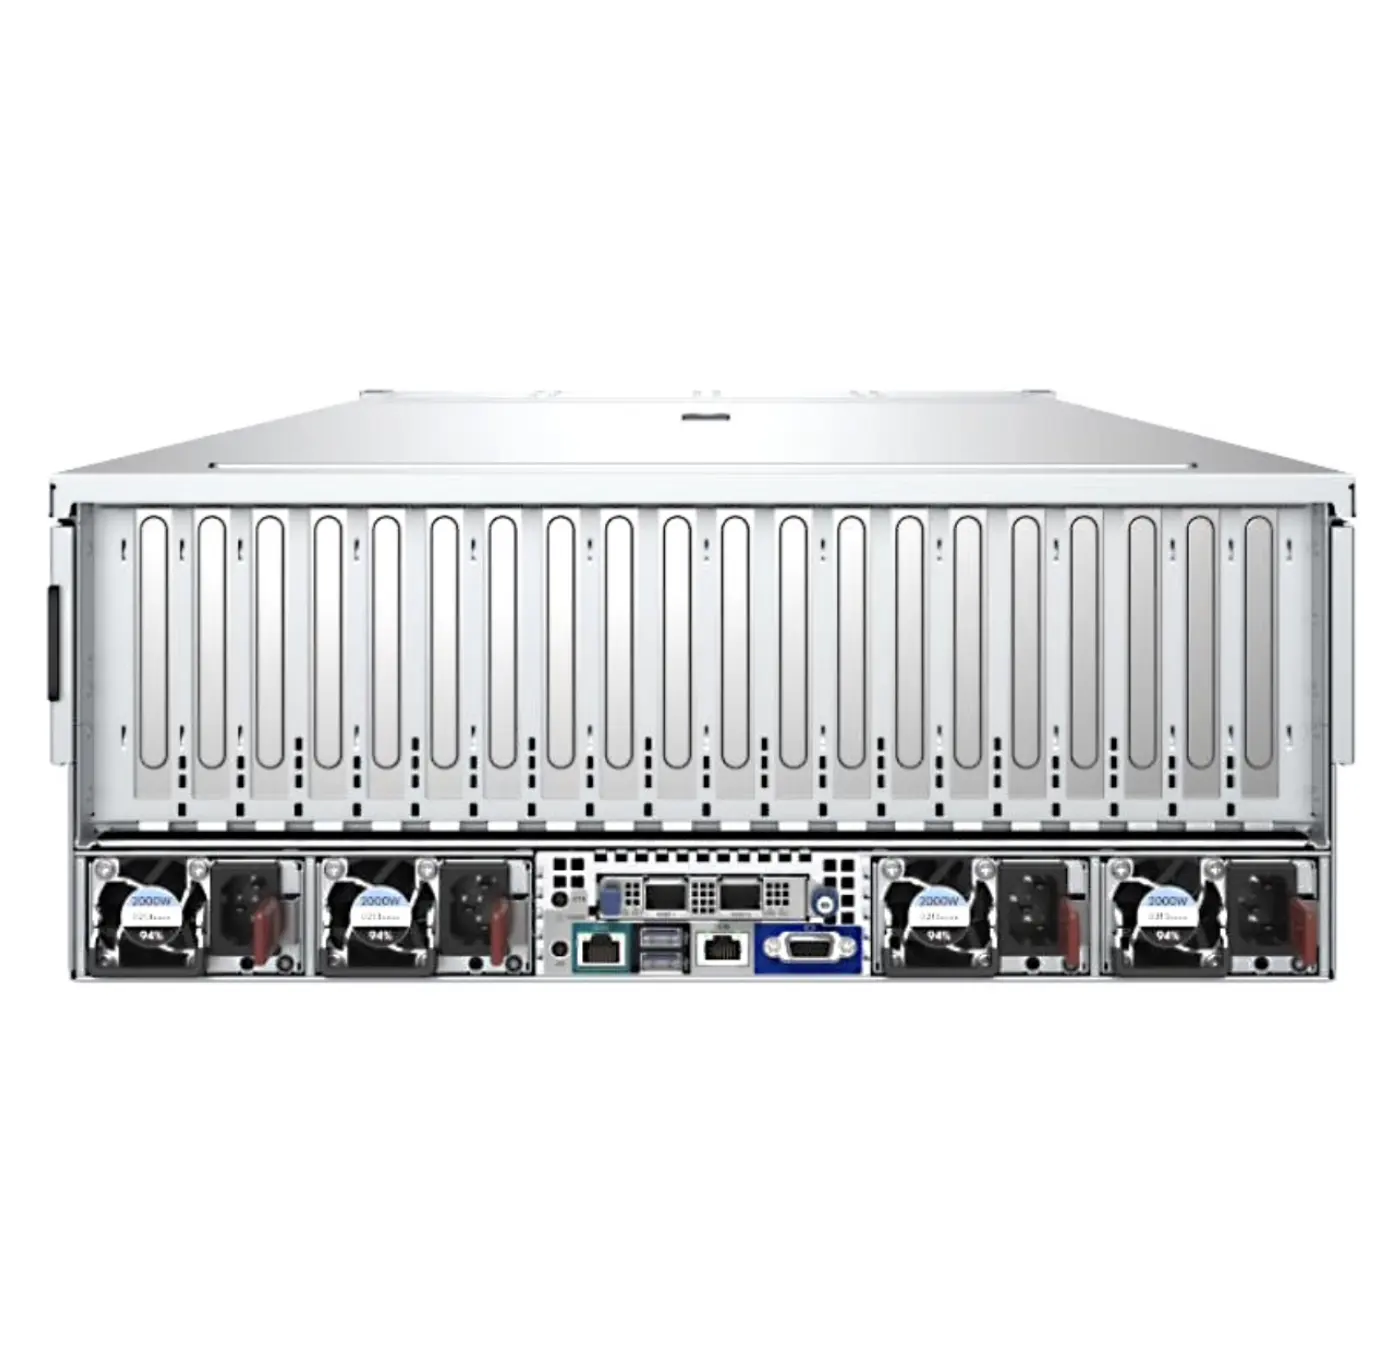 Rack Server GPU Server R5300G5 win server 2022 terbaru H3C unierver R5300 G5 4U linux